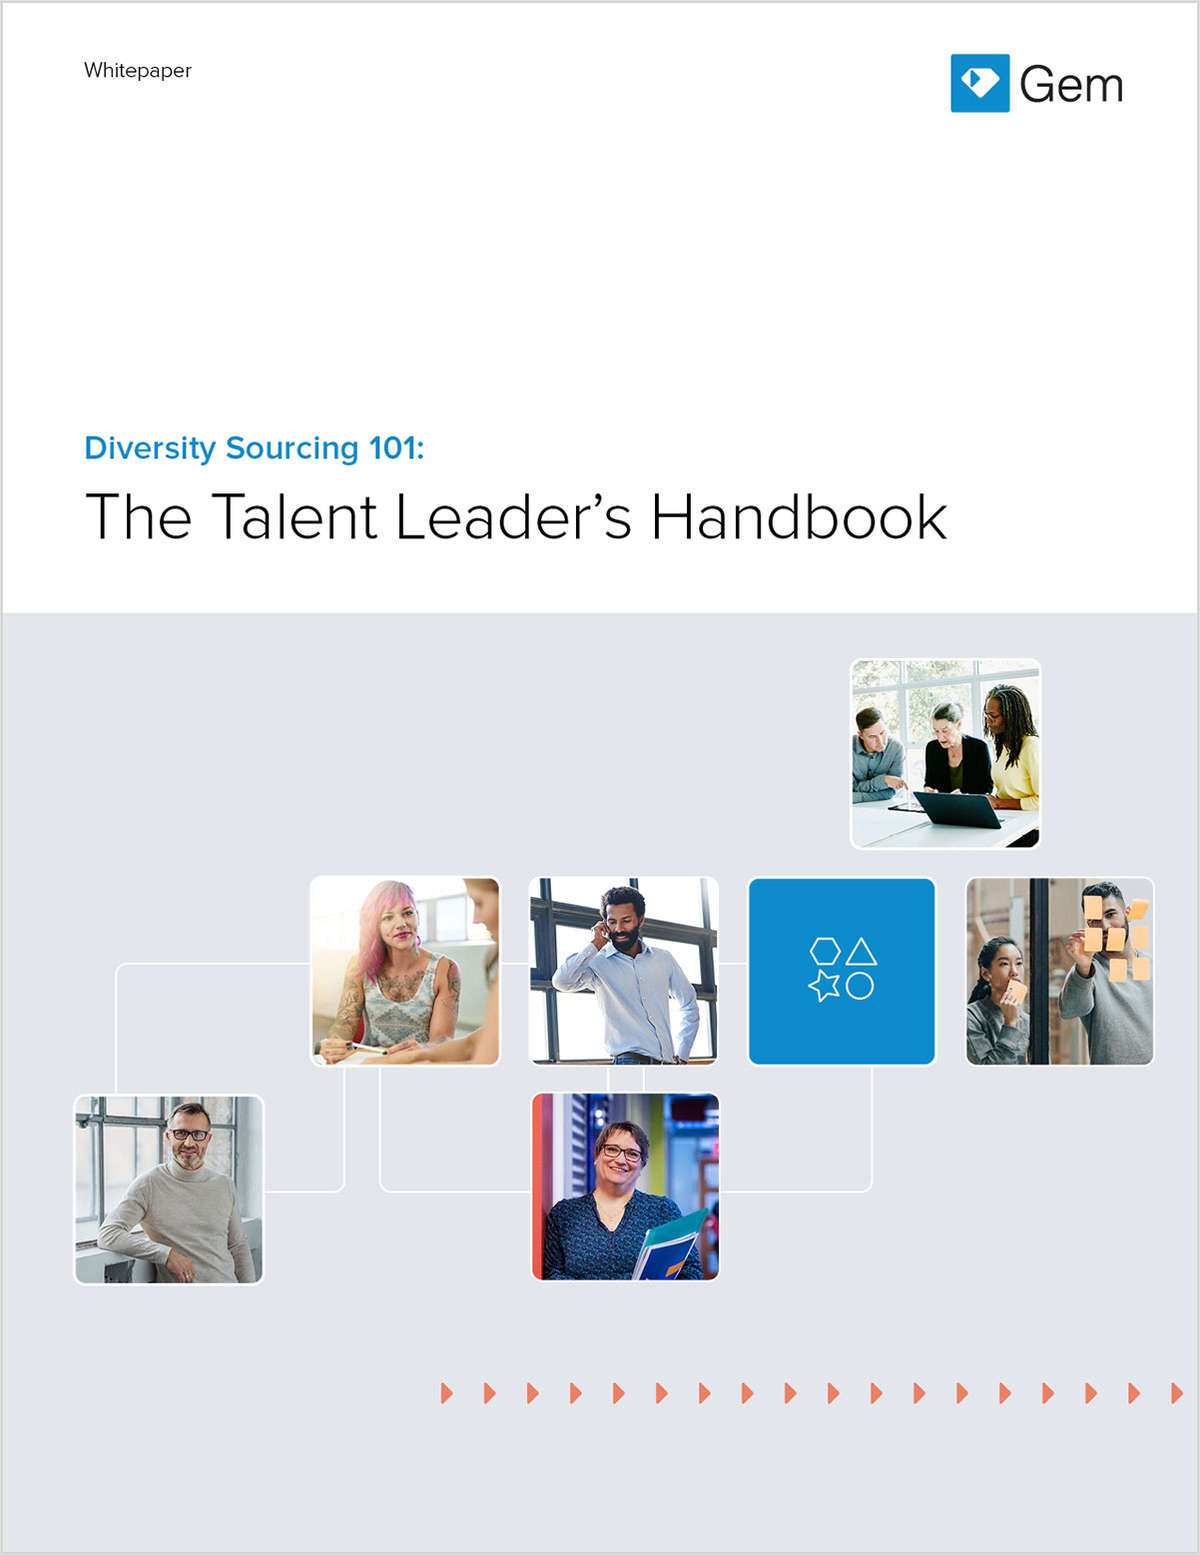 Diversity Sourcing 101: The Talent Leader's Handbook